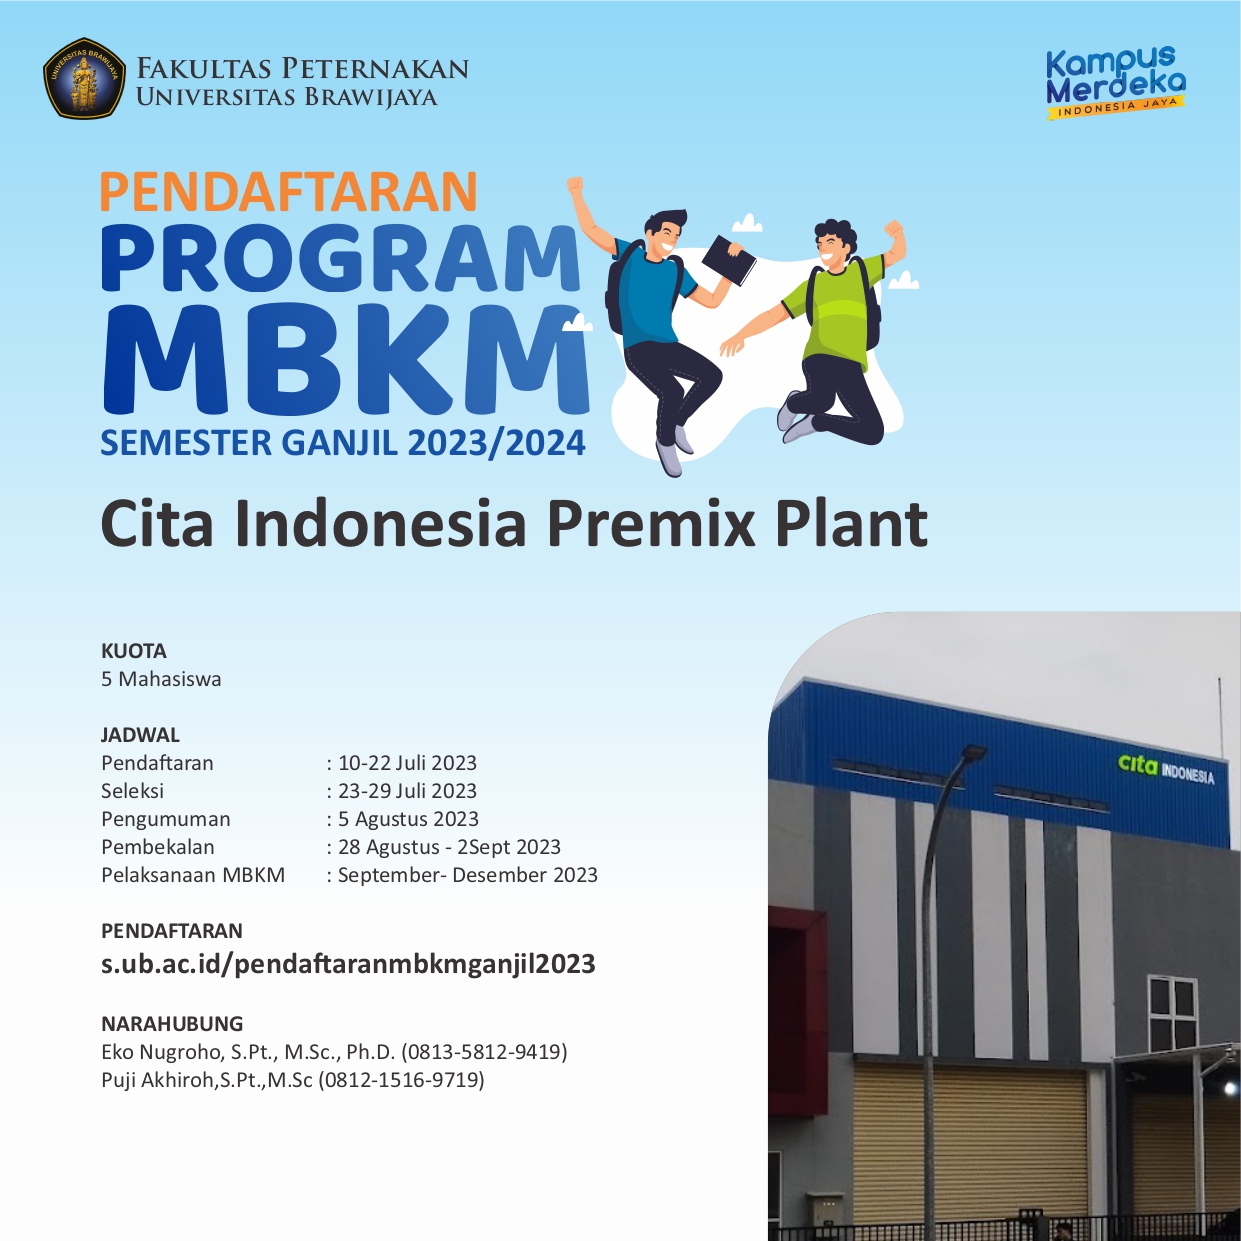 Registration of MBKM Cita Indonesia Premix Plant